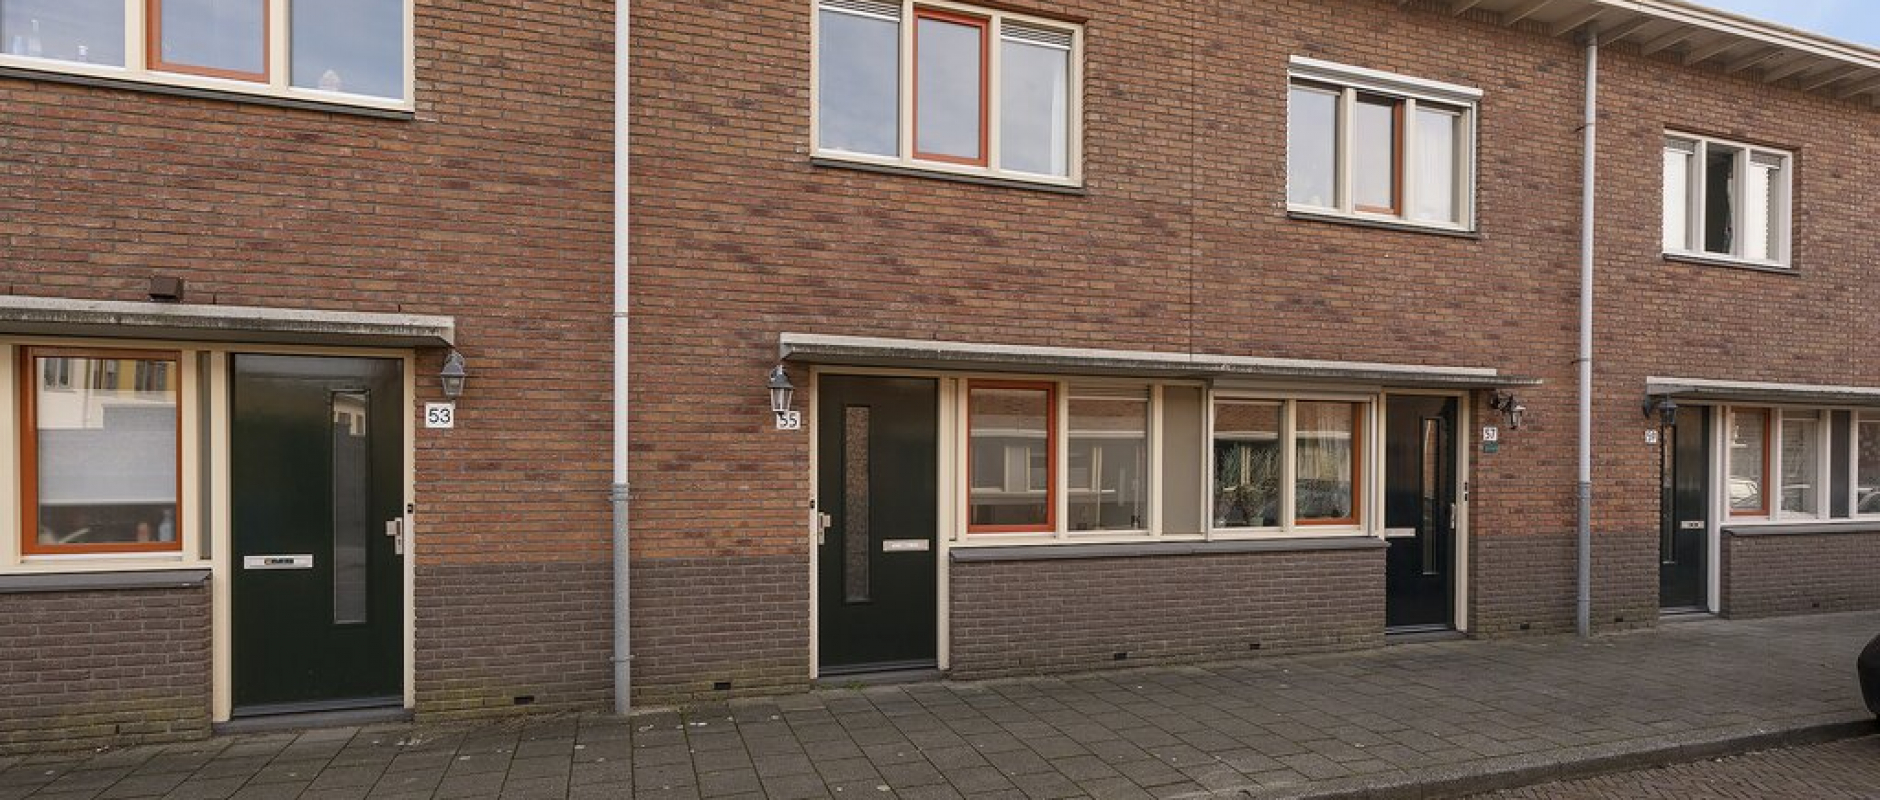 Woning te koop aan de Piet Heinstraat 55 te Zwolle